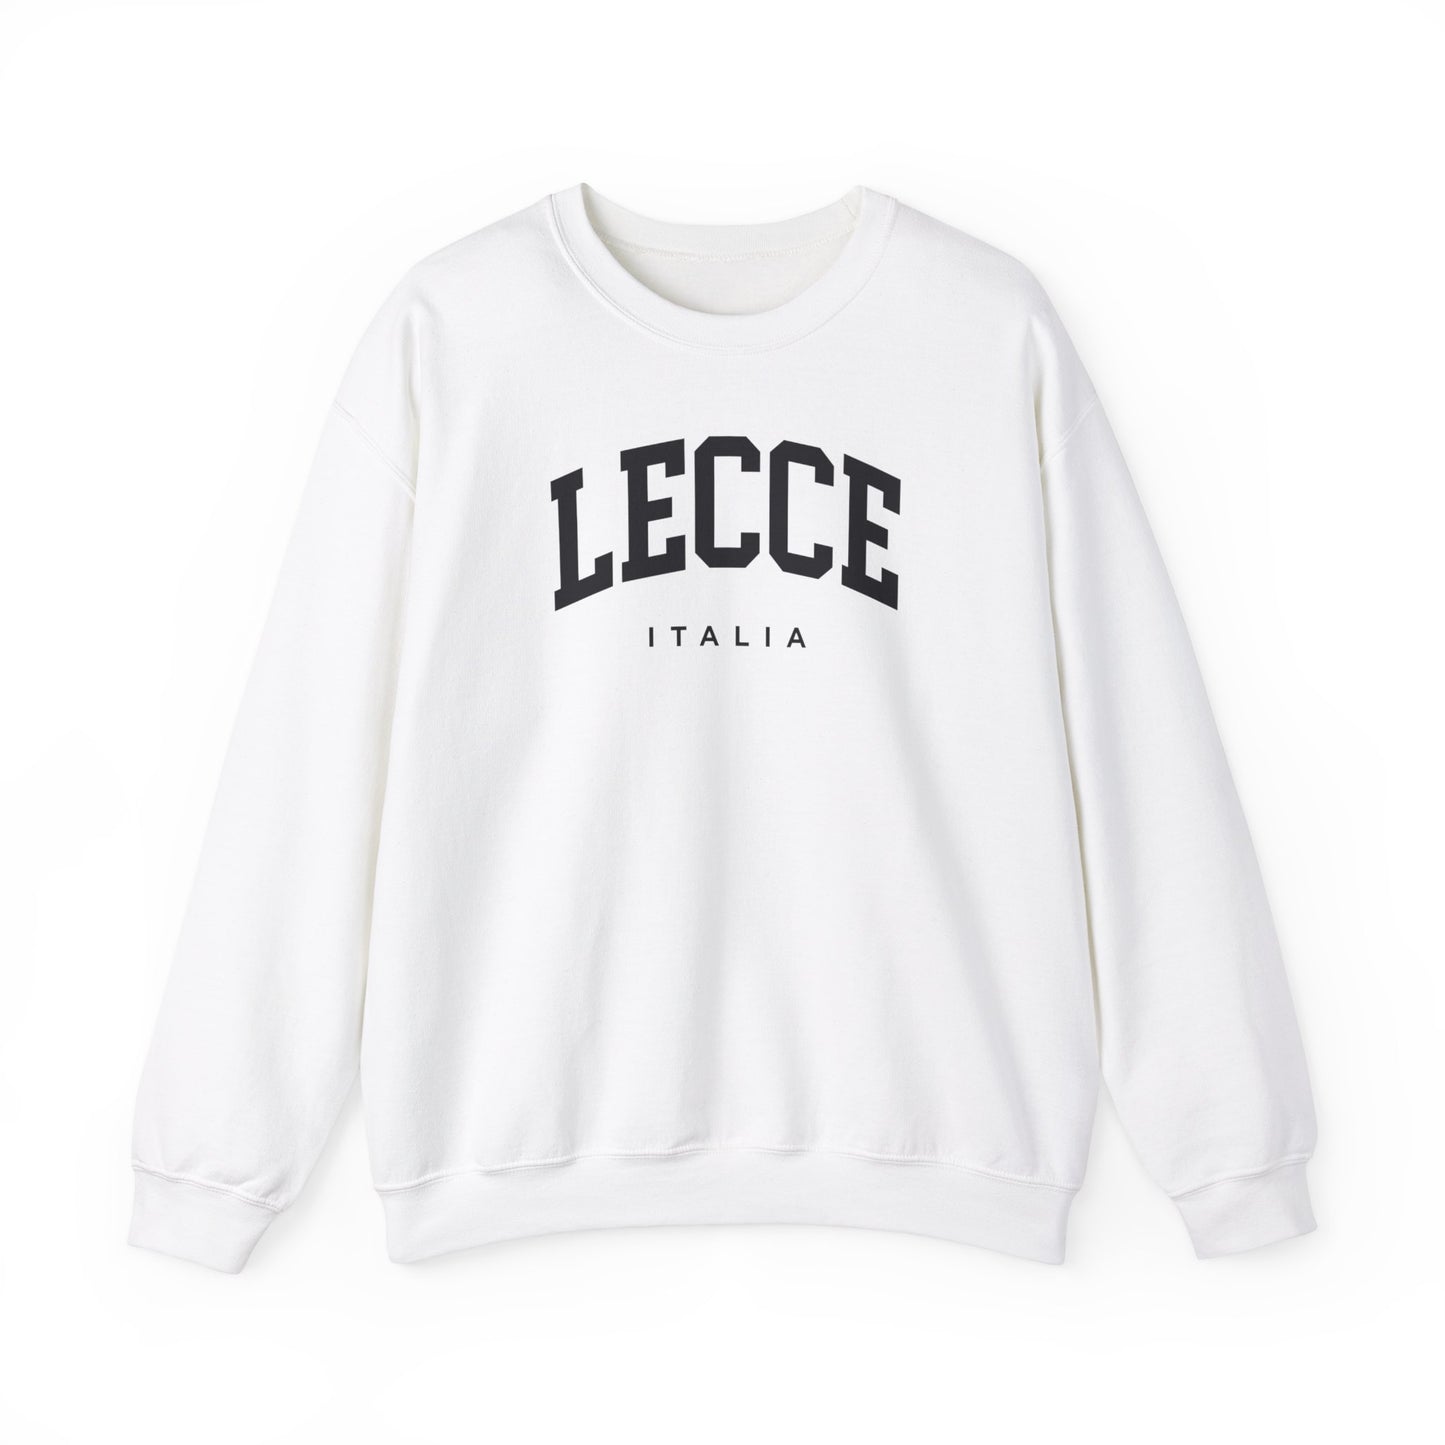 Lecce Italy Sweatshirt